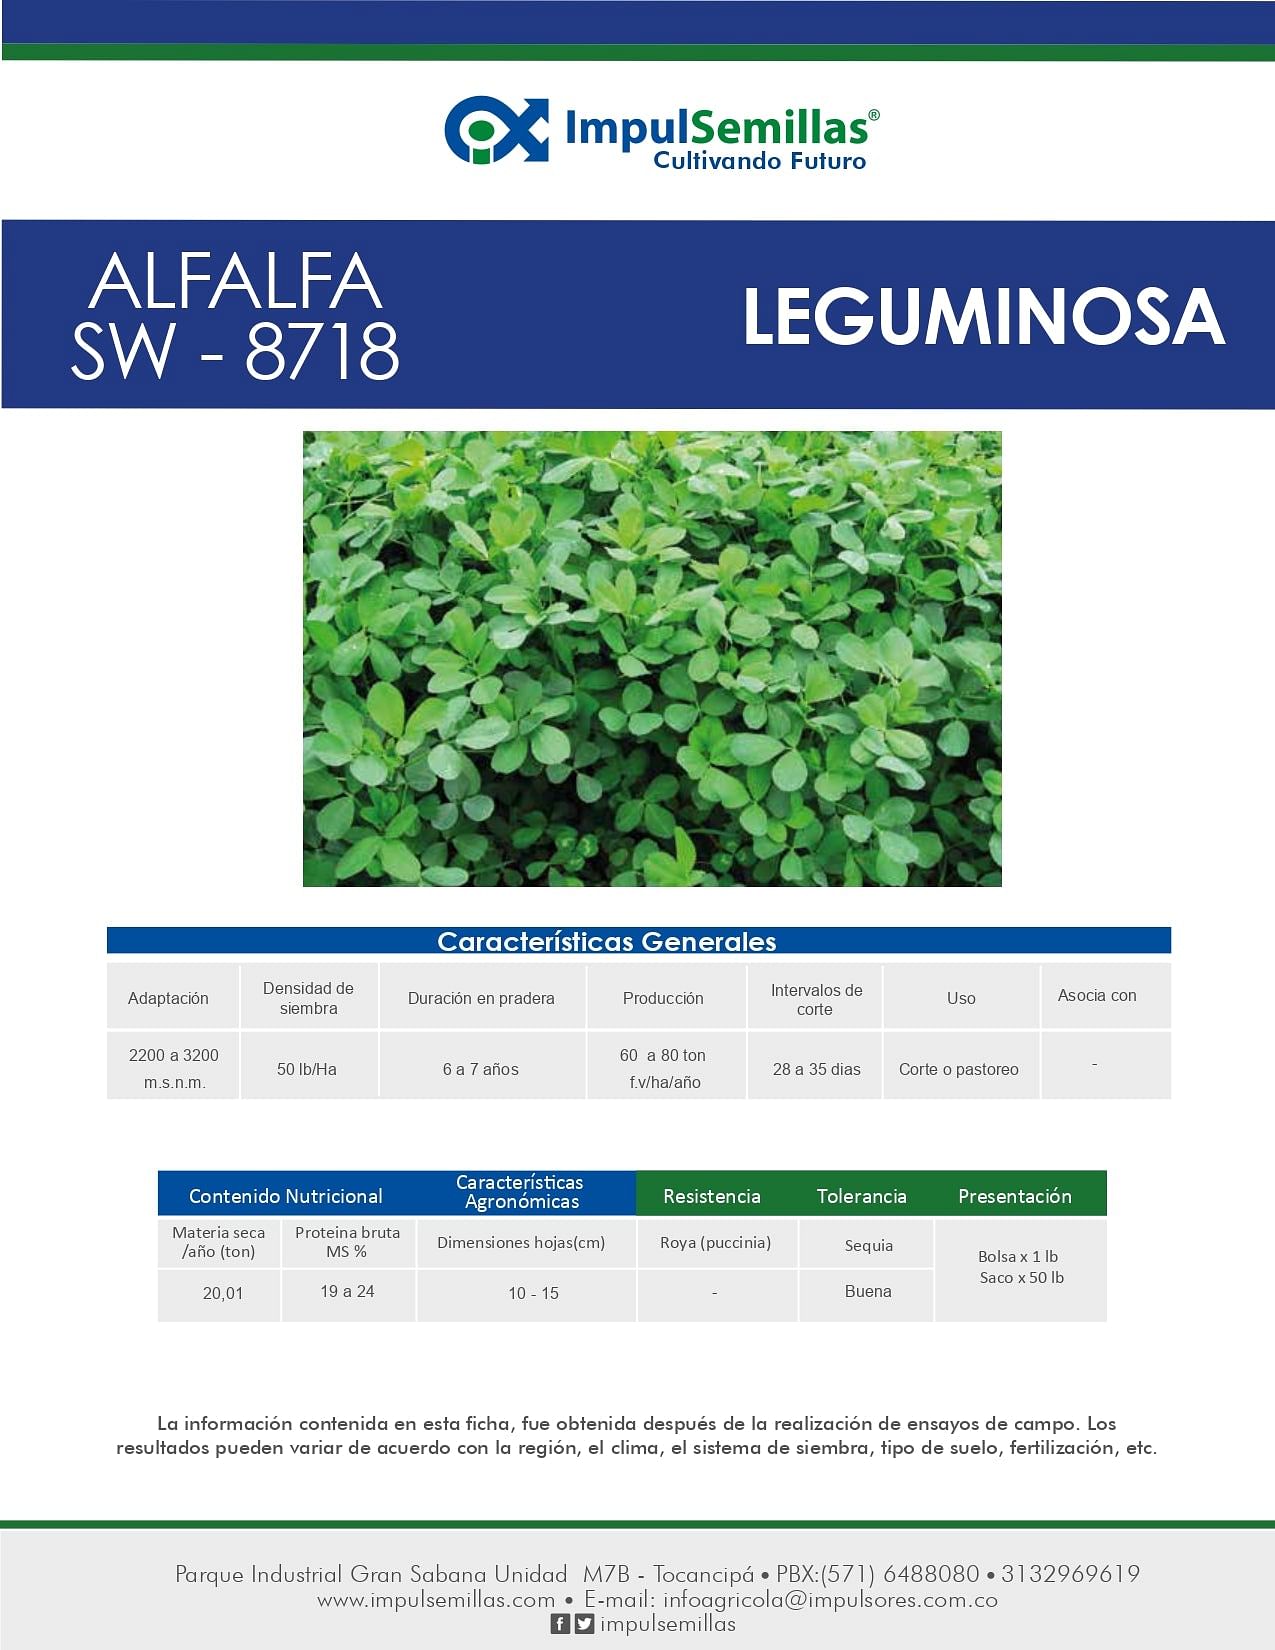 Alfalfa SW - 8718 x 22.7 Kg.